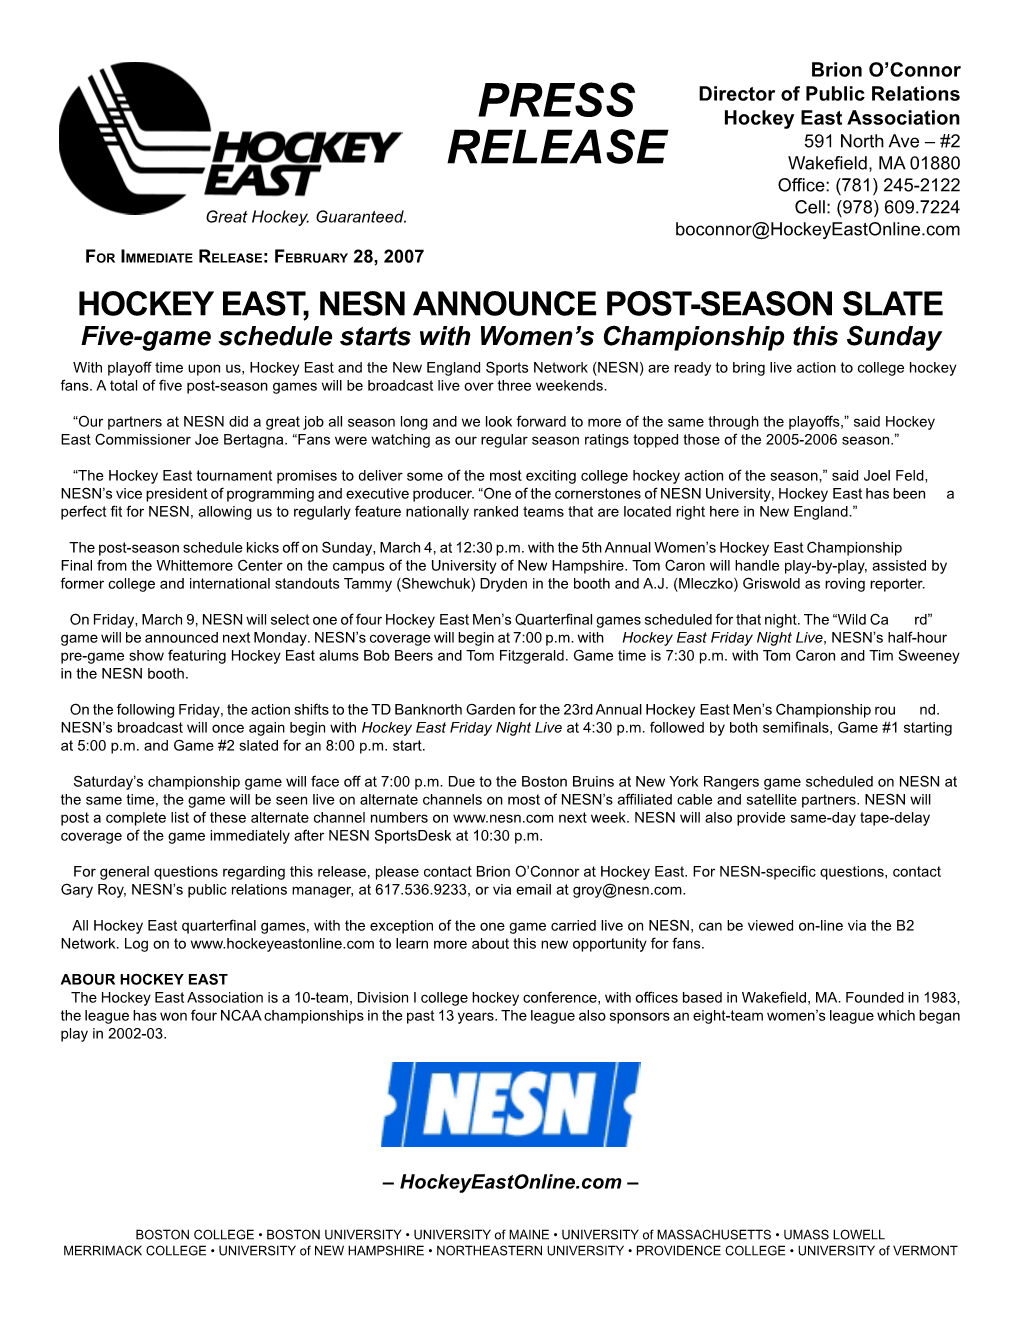 Hockey East, Nesn Announce Post-Season Slate